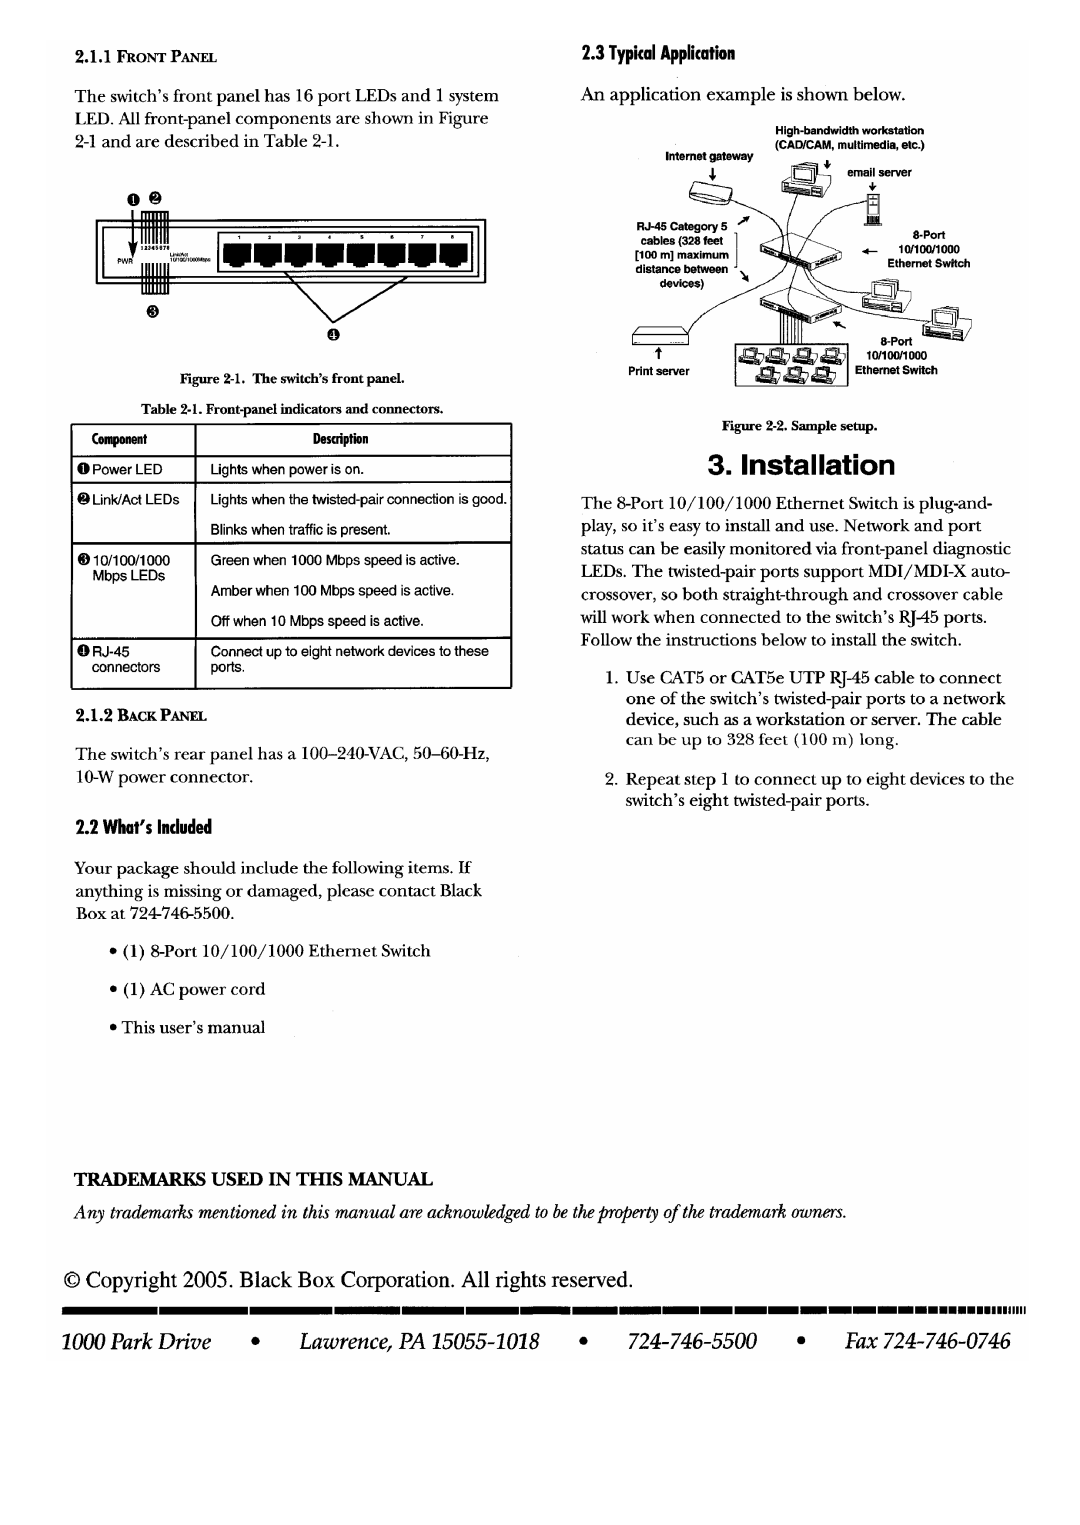 Black Box lgb2001a, 8-port 10/100/1000 ethernet switch manual 